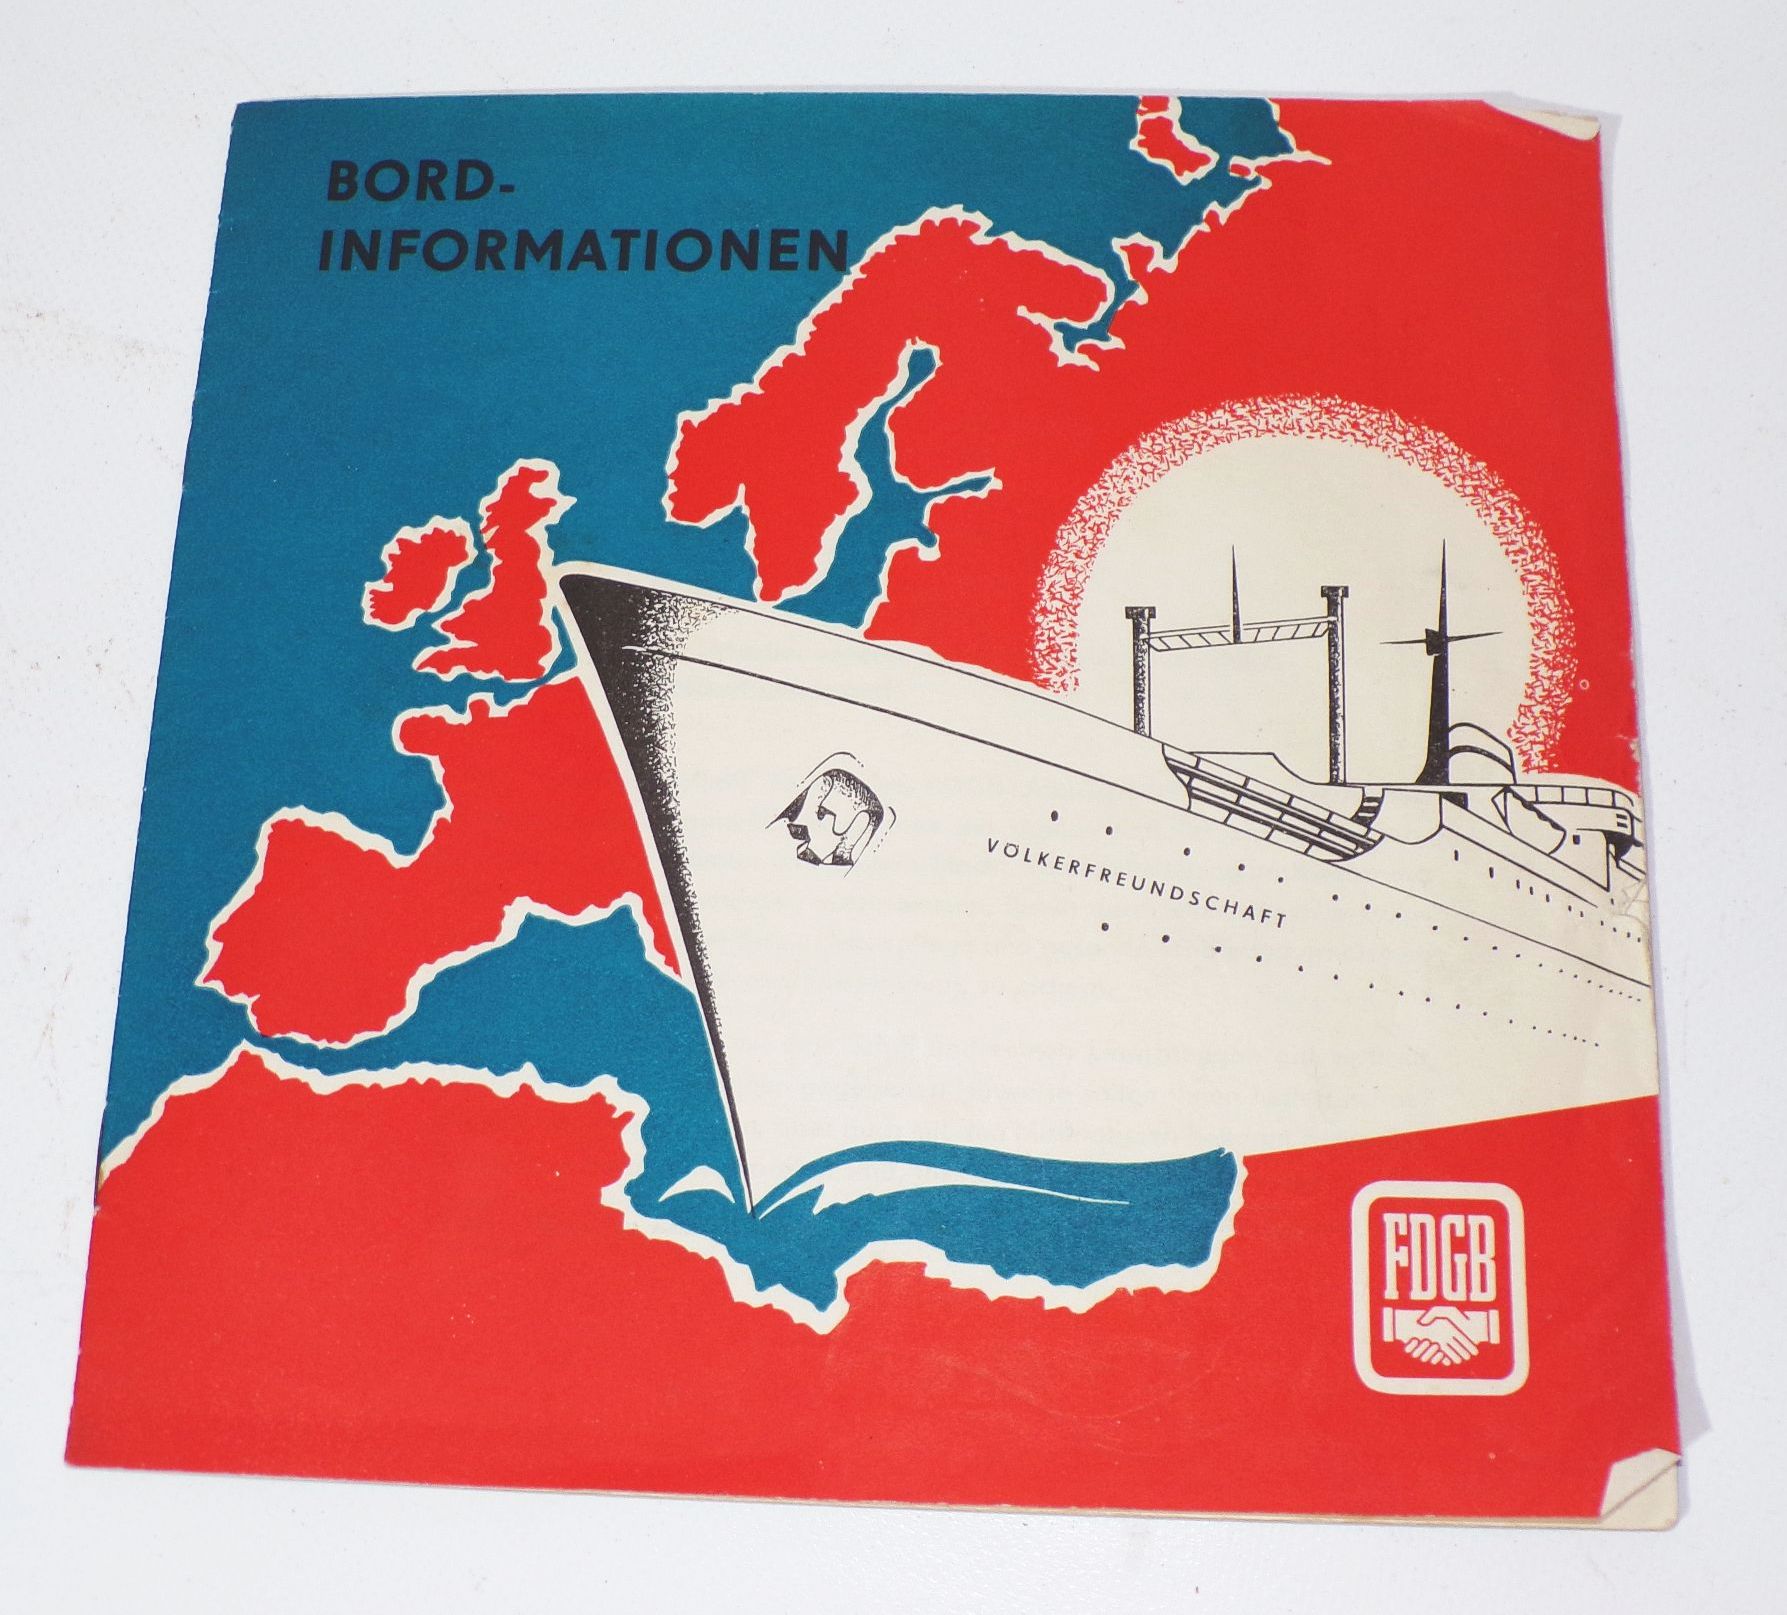 FDGB Bord Information 1961 Völkerfreundschaft 